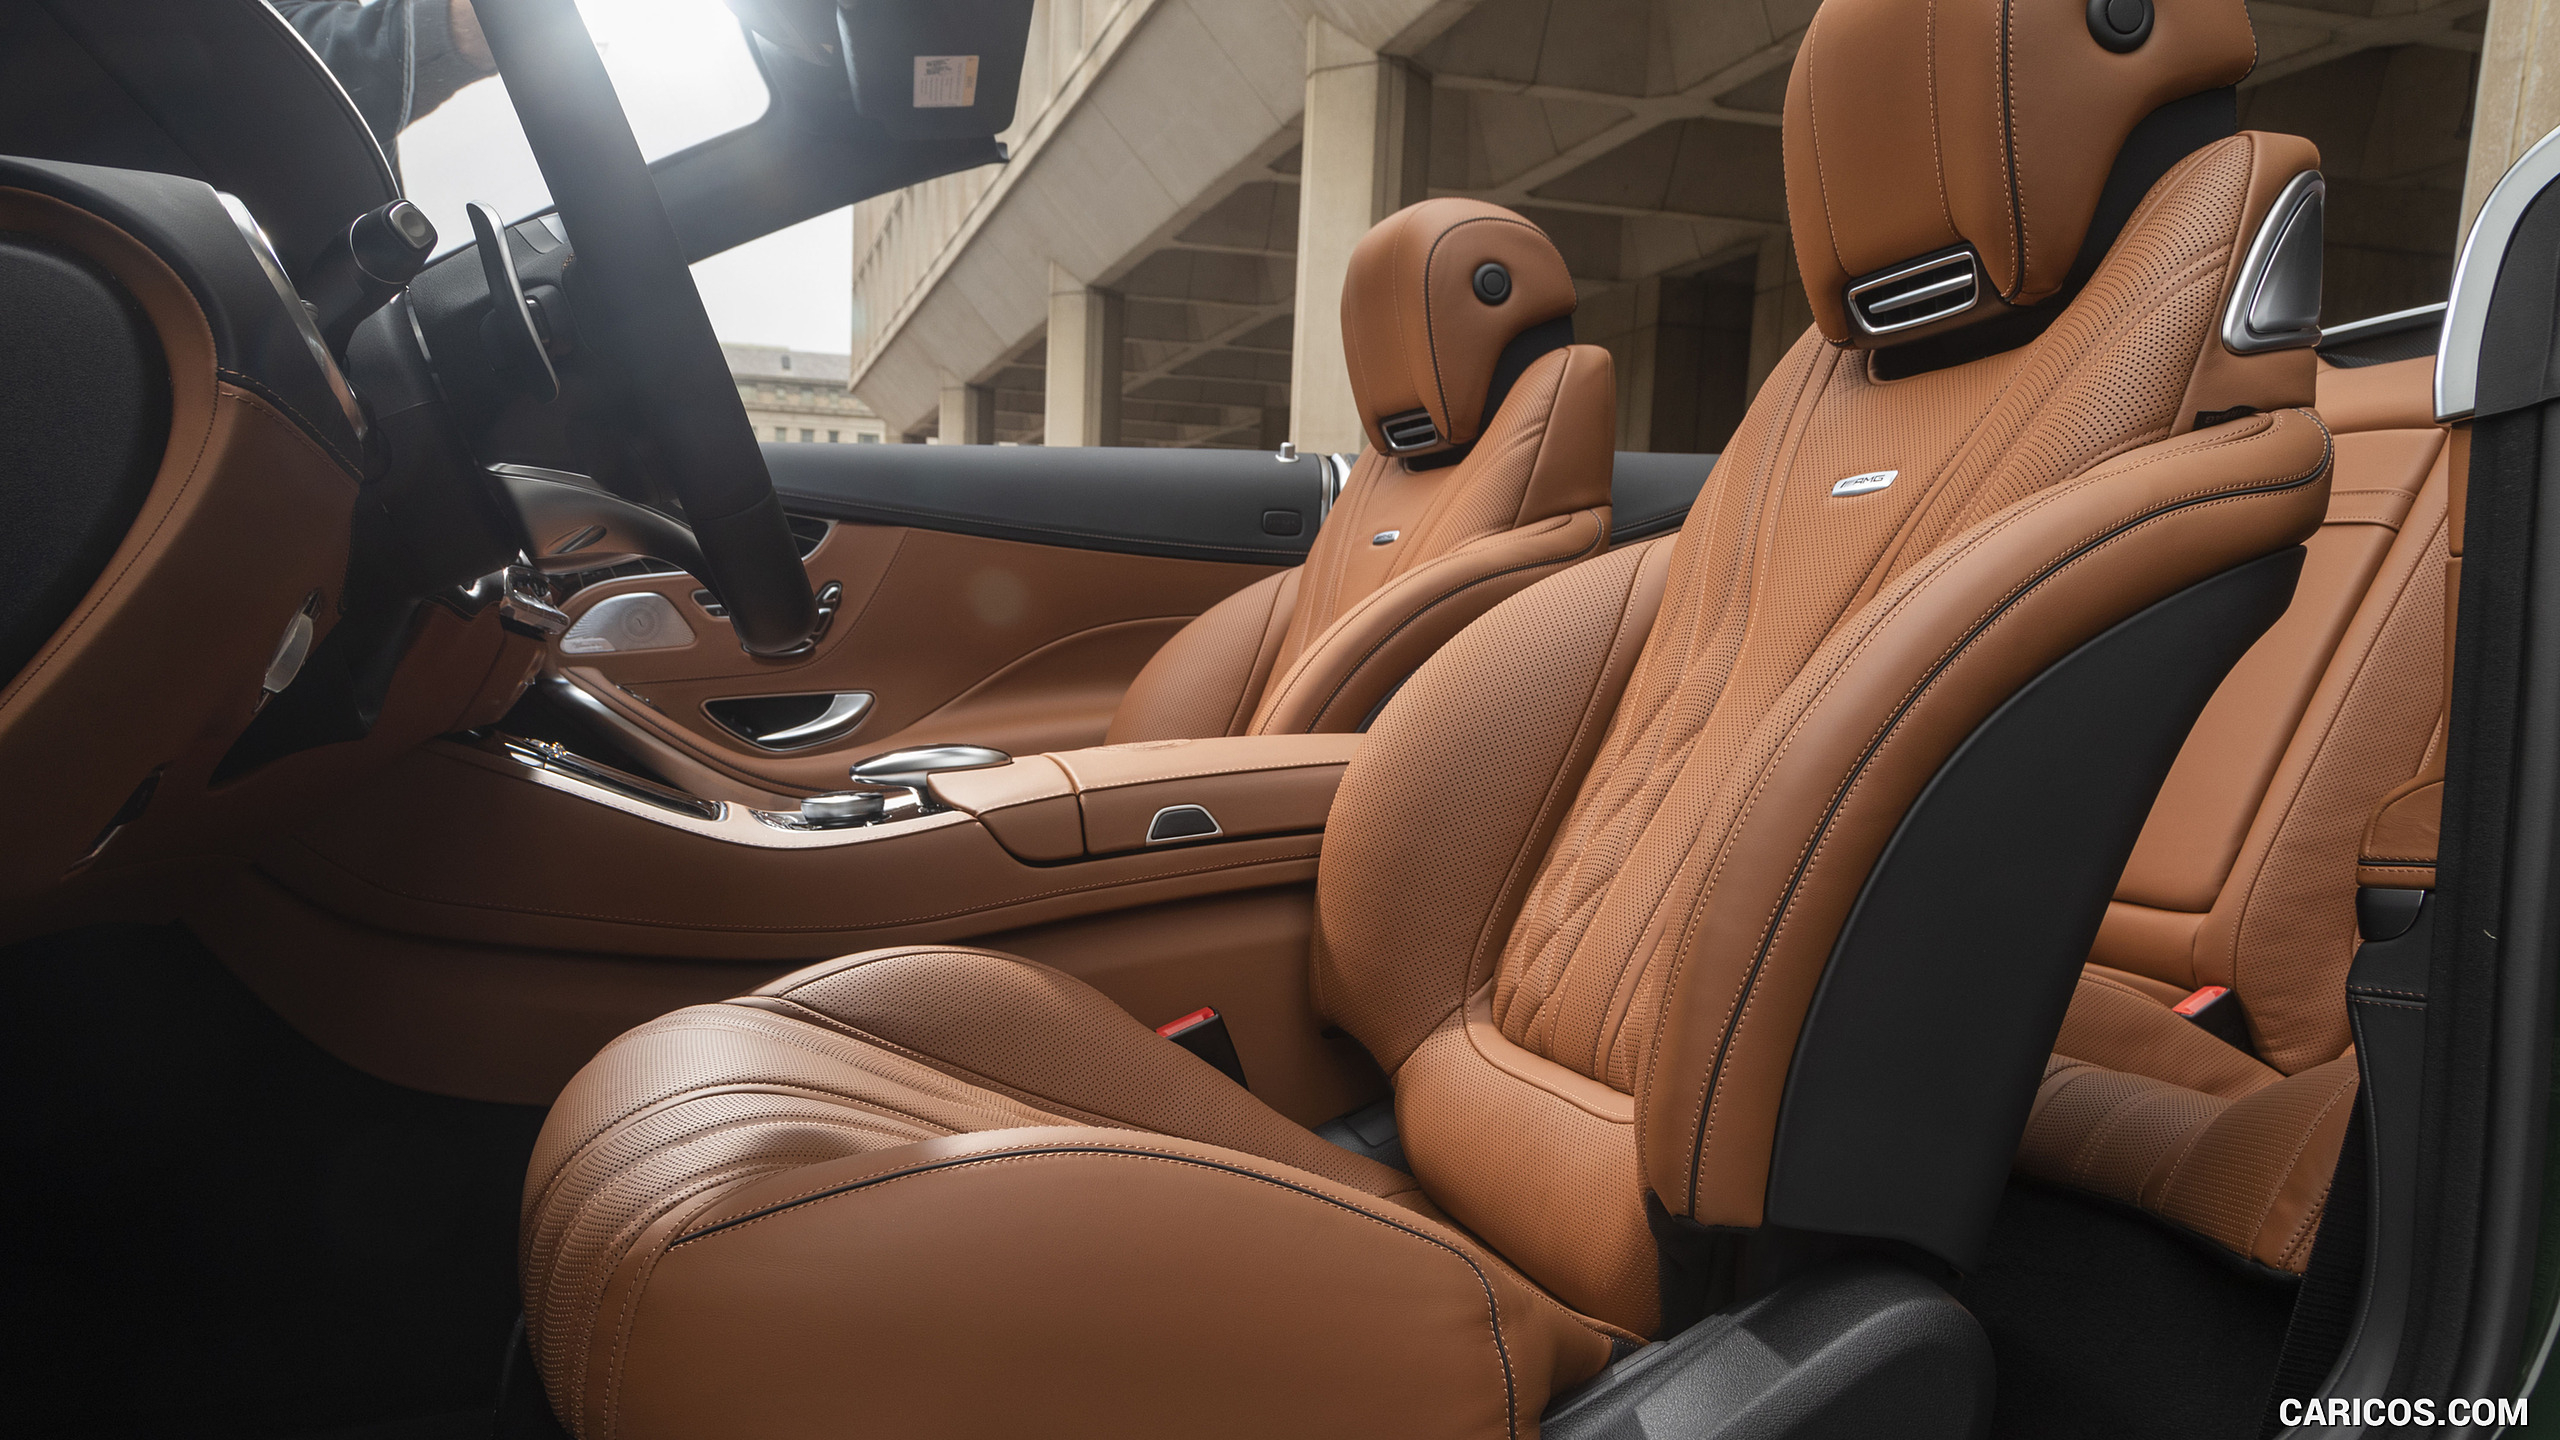 2020 Mercedes-AMG S 63 Cabriolet (US-Spec) - Interior, Front Seats, #44 of 47